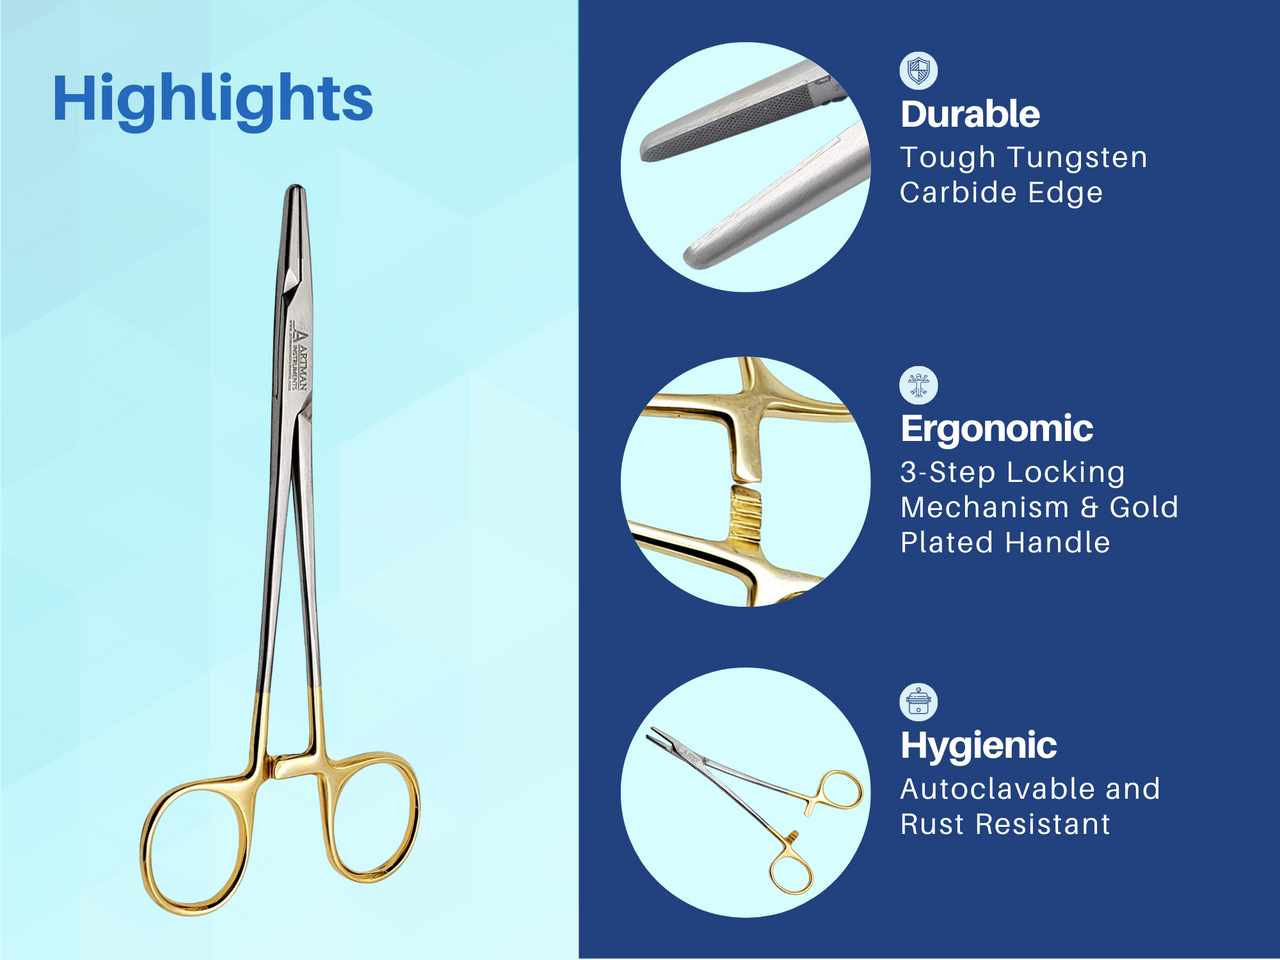 Cruciate Needle Holder Tungsten Carbide - Universal Surgical Instruments